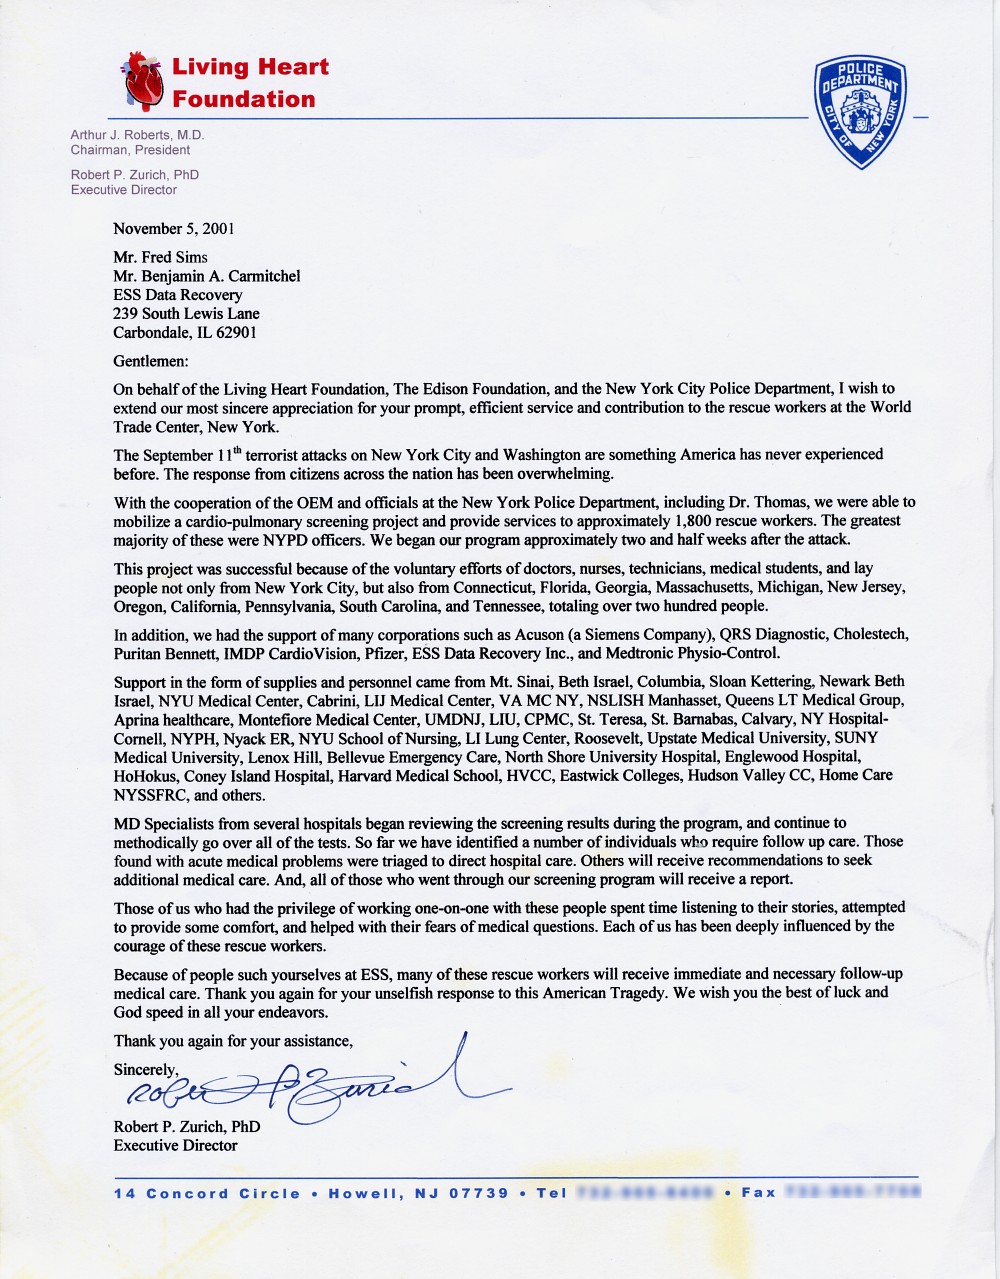 NYPD & Living Heart Foundation testimonial letter